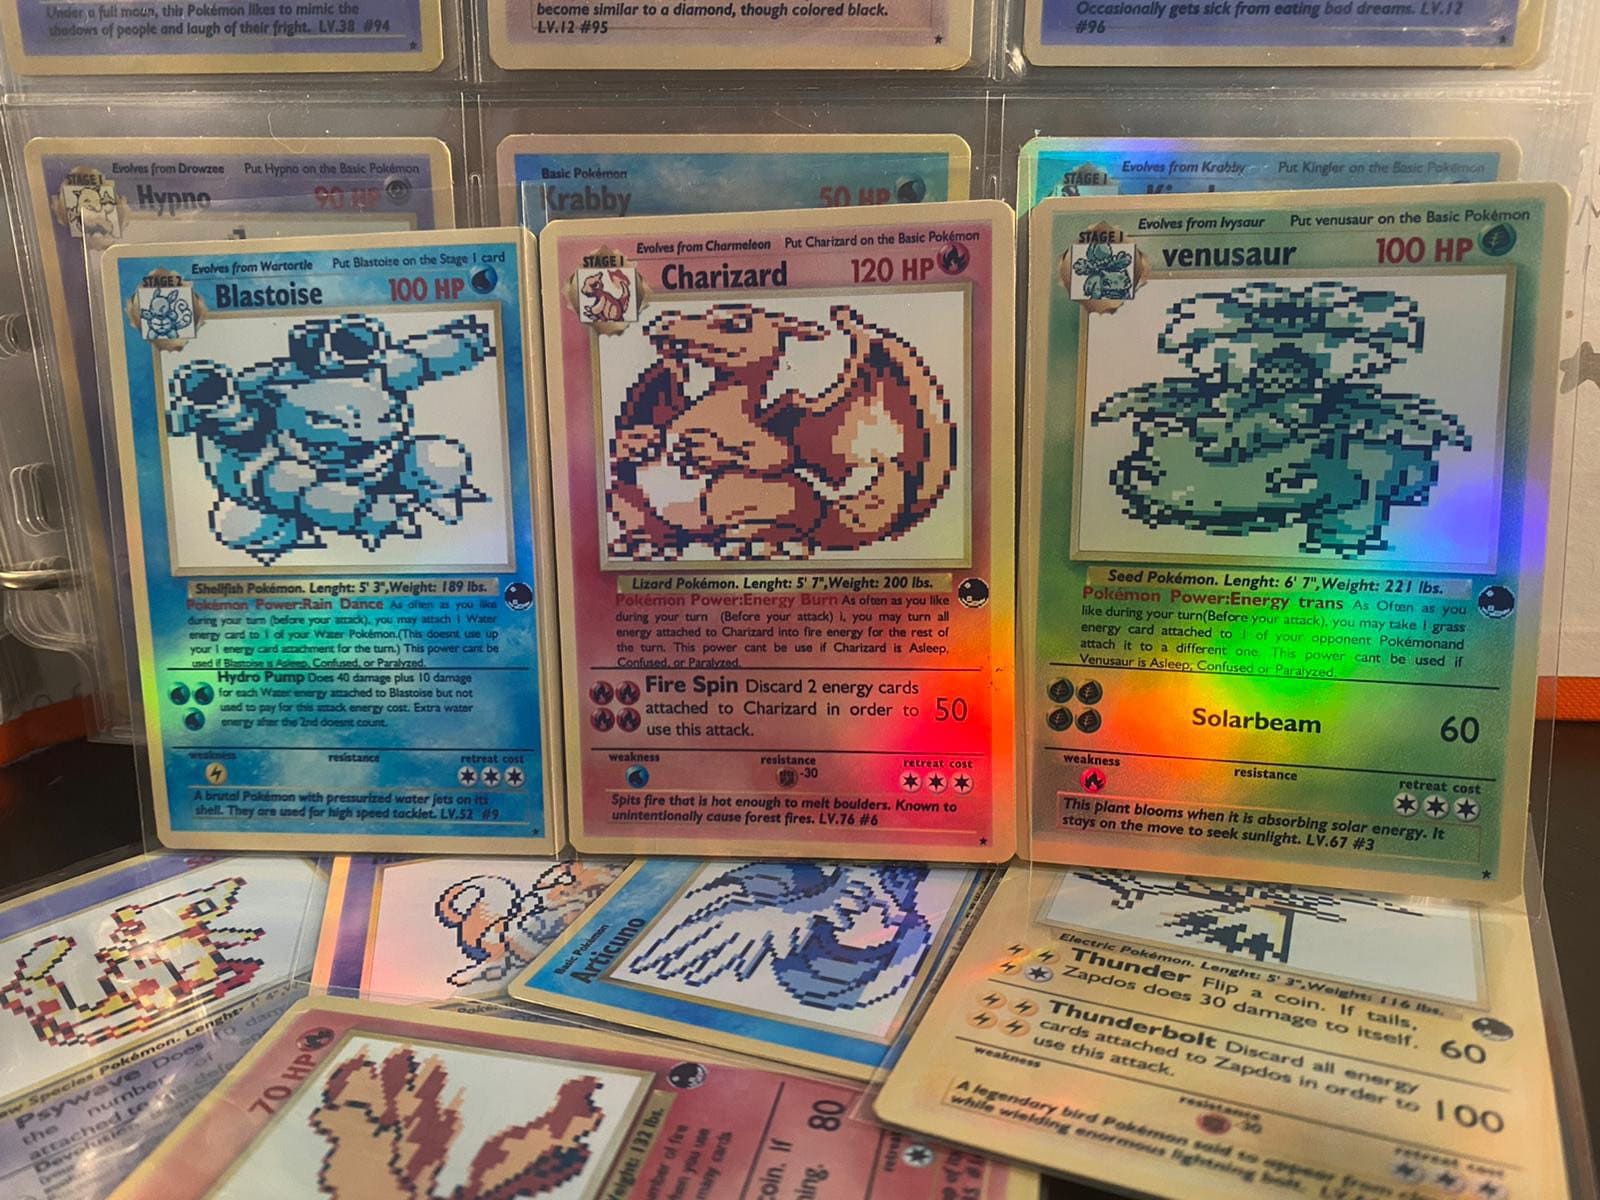 Bundle Moltres Zapdos Articuno Pokemon Card GB Sprite Art Gx 